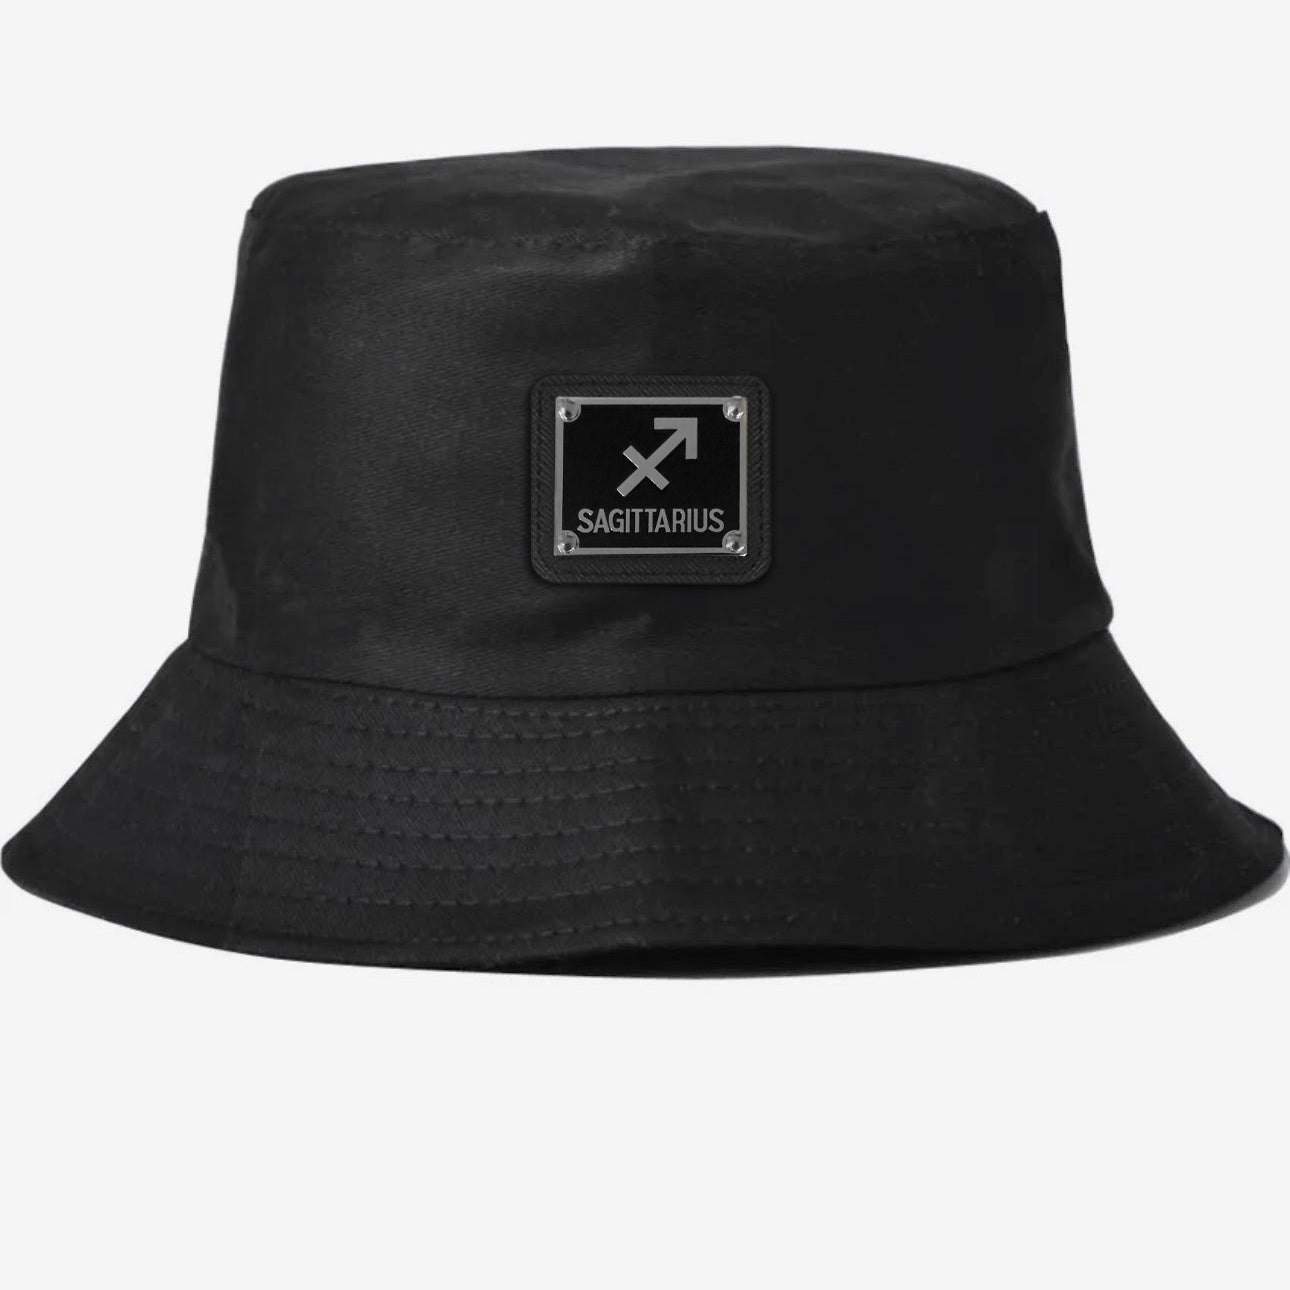 Black and silver Sagittarius bucket hat